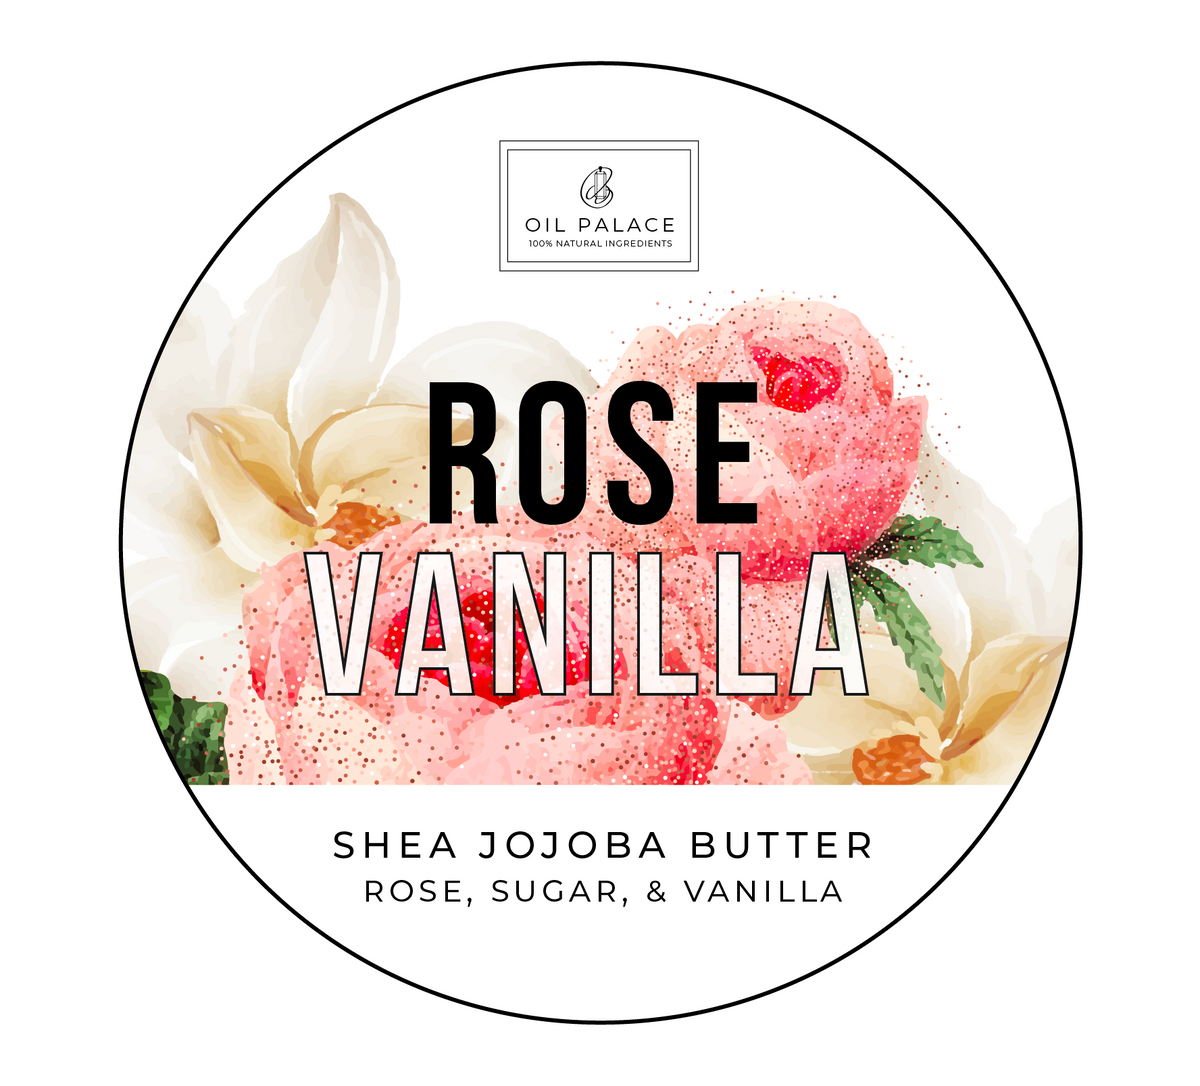 Rose Vanilla Shea Jojoba Butter 8oz